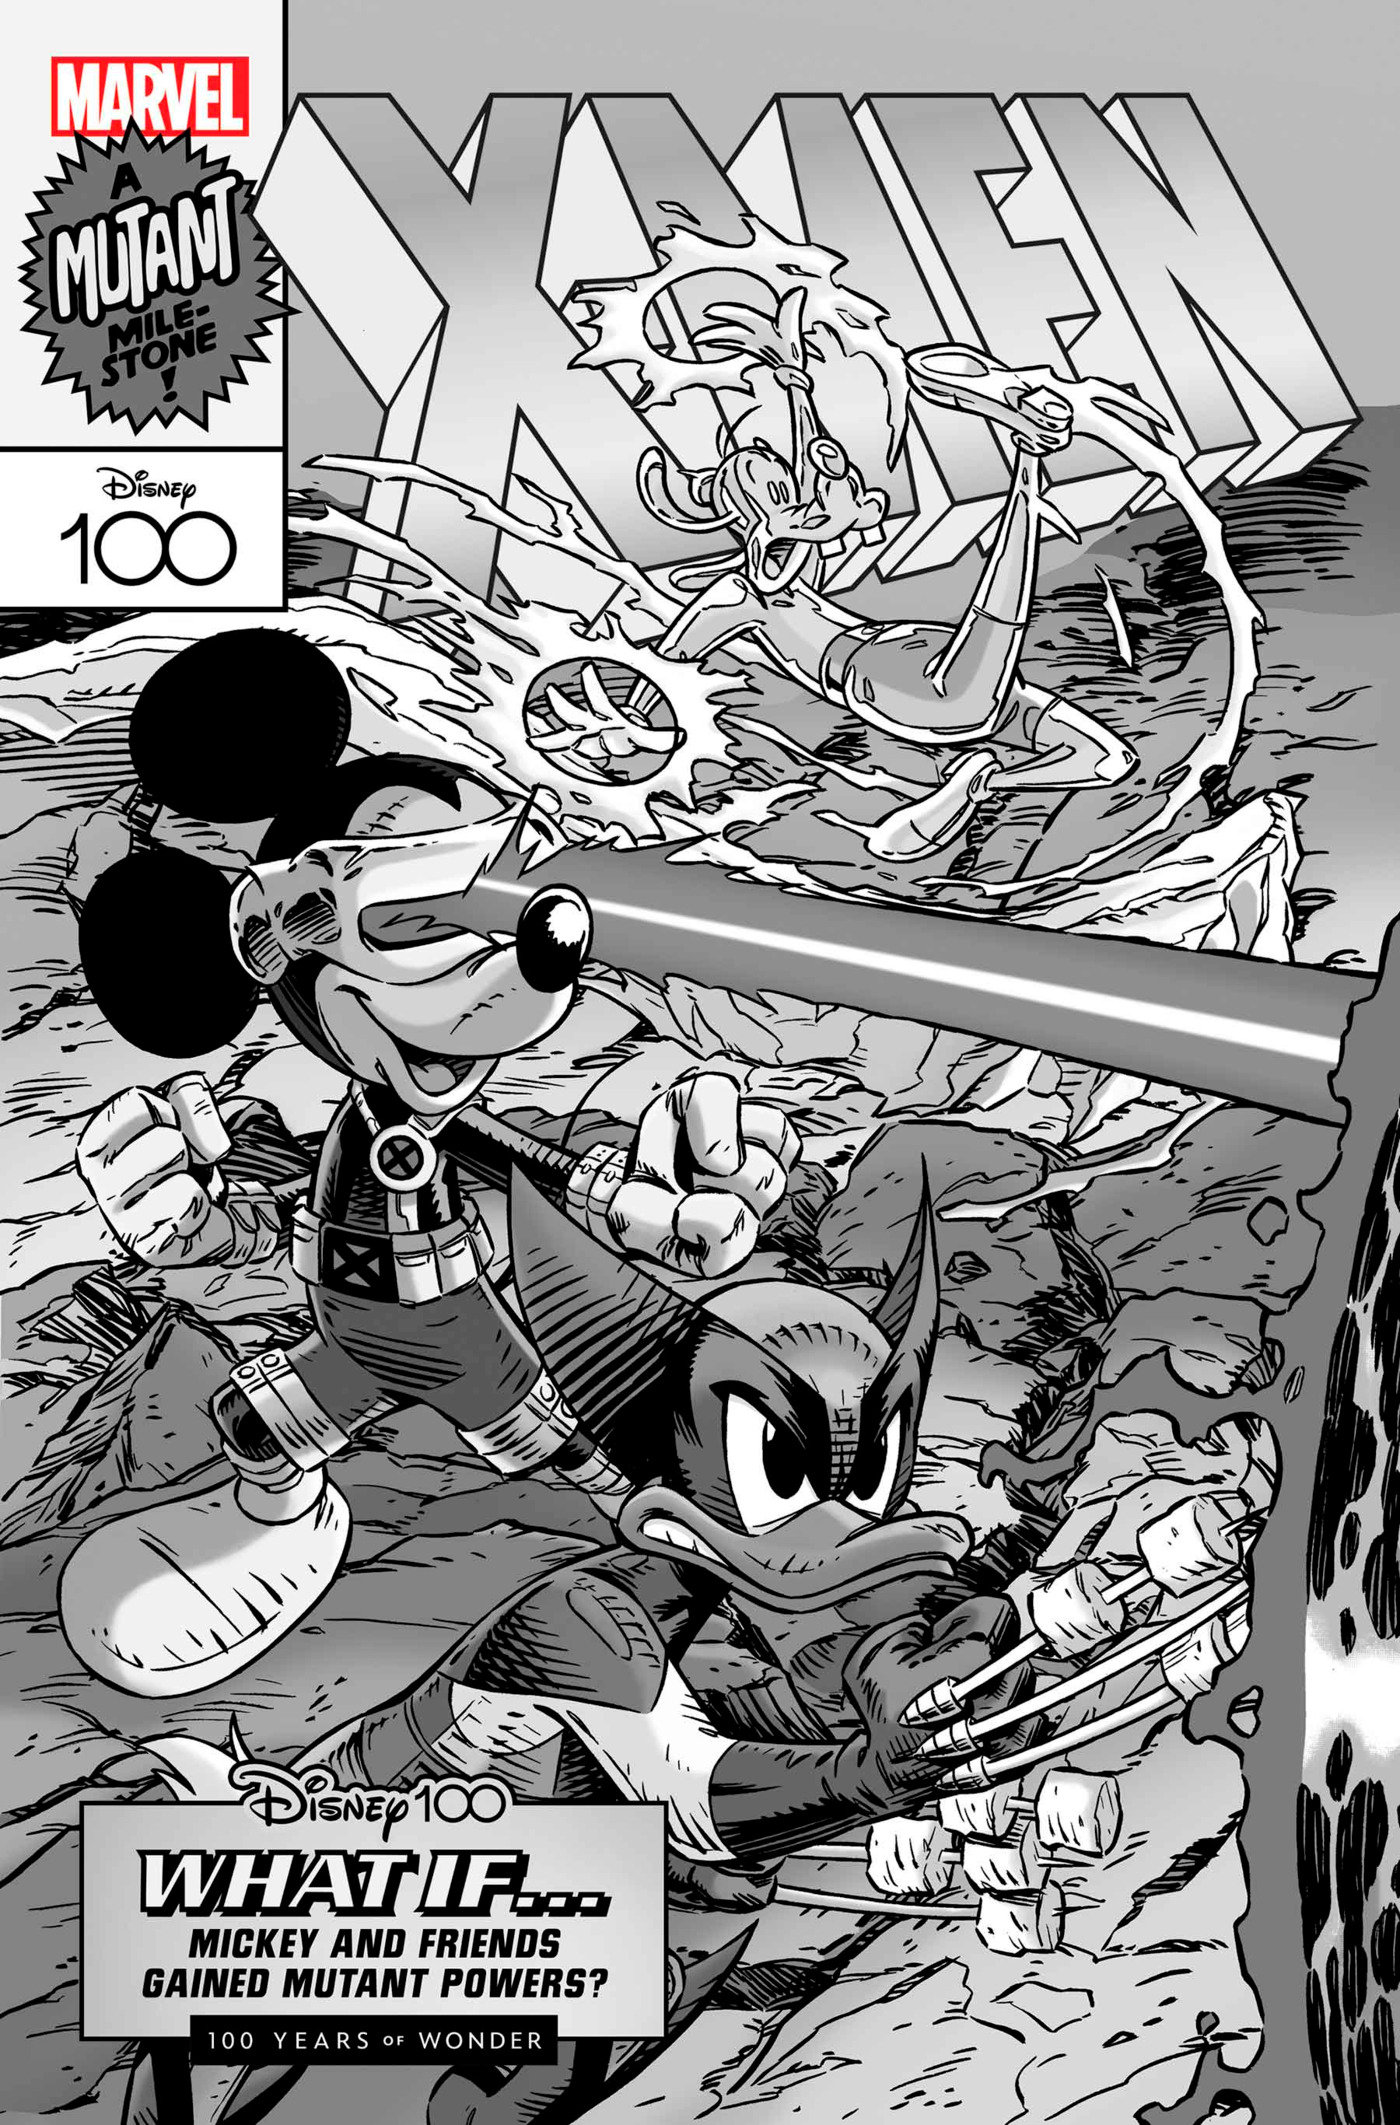 Amazing Spider-Man #39 Vitale Mangiatordi Disney100 X-Men Black And White Variant (Gang War) 1 for 100 Incentive